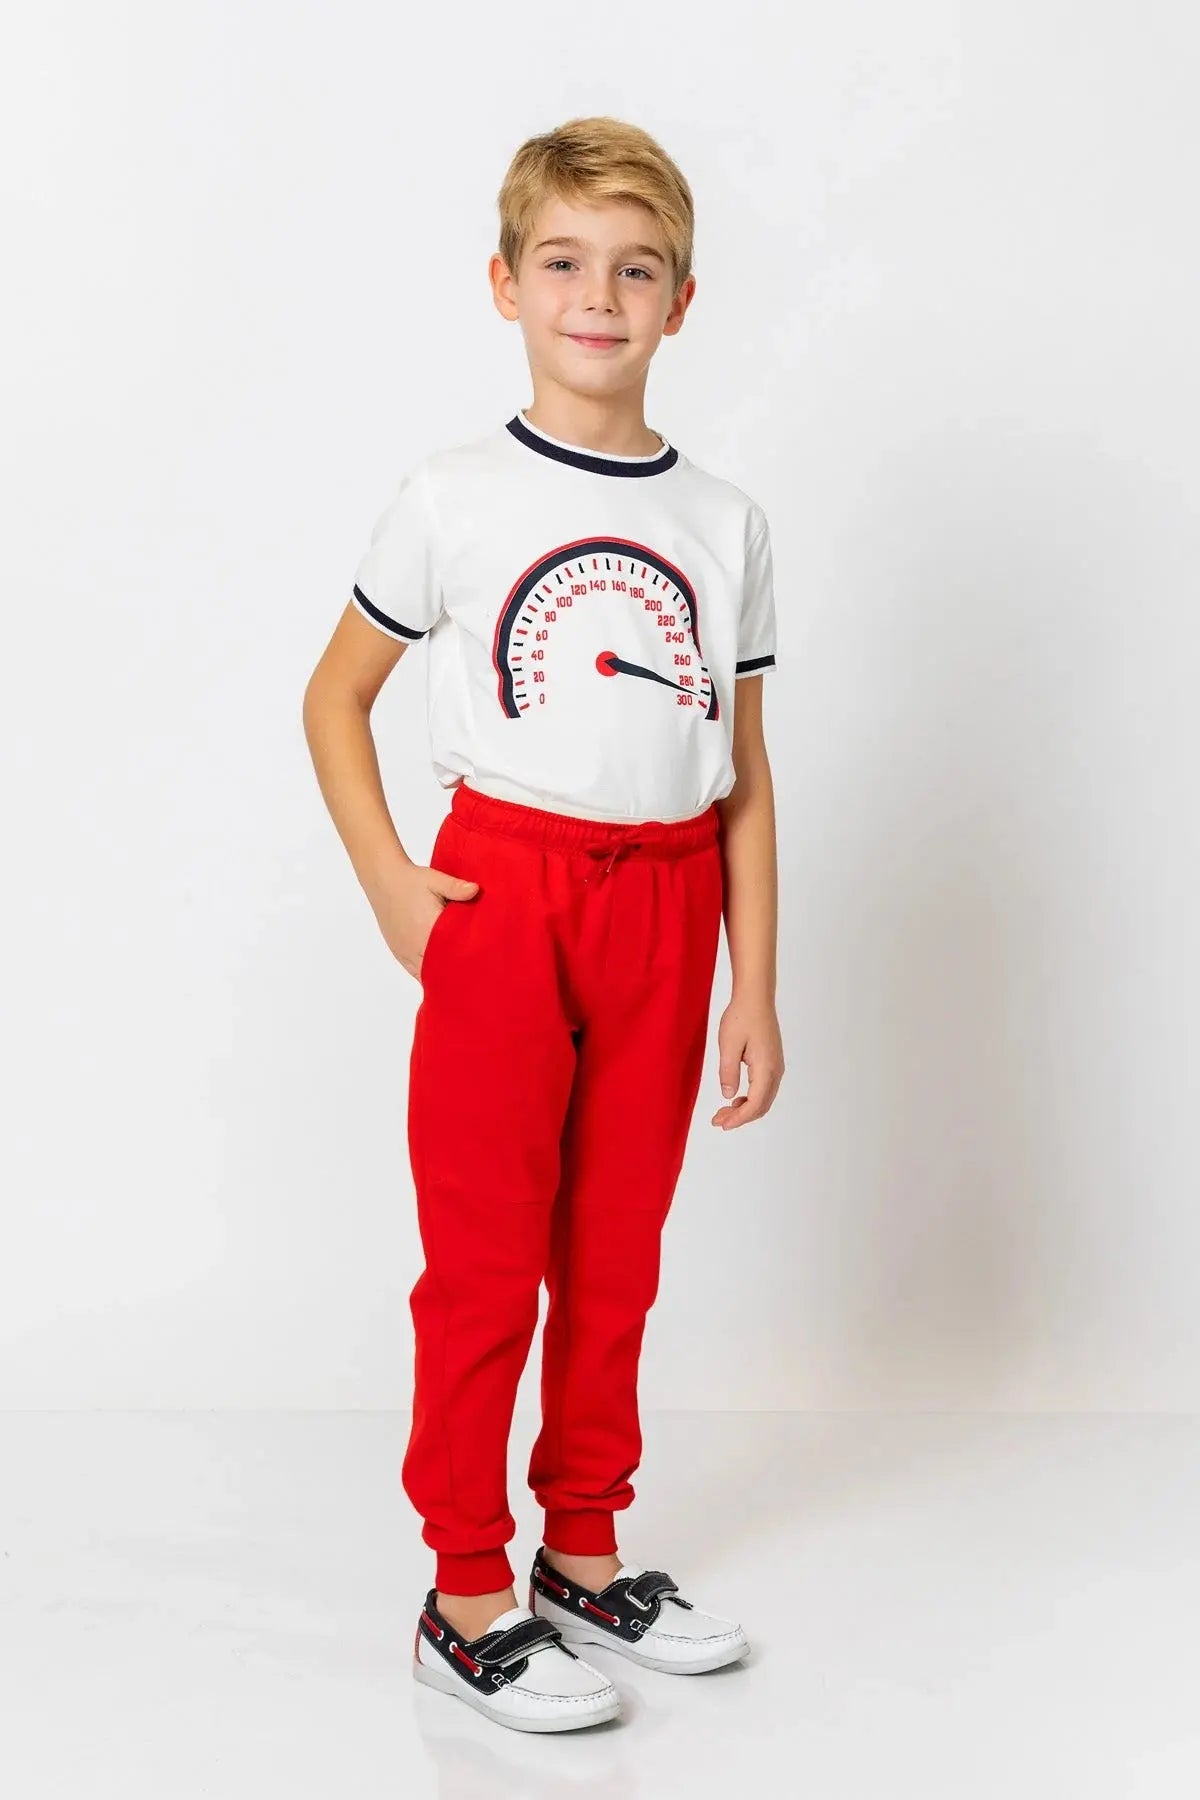 Buy JUMPTIGER Kids Boys Stylish Regular wear High Export Quality